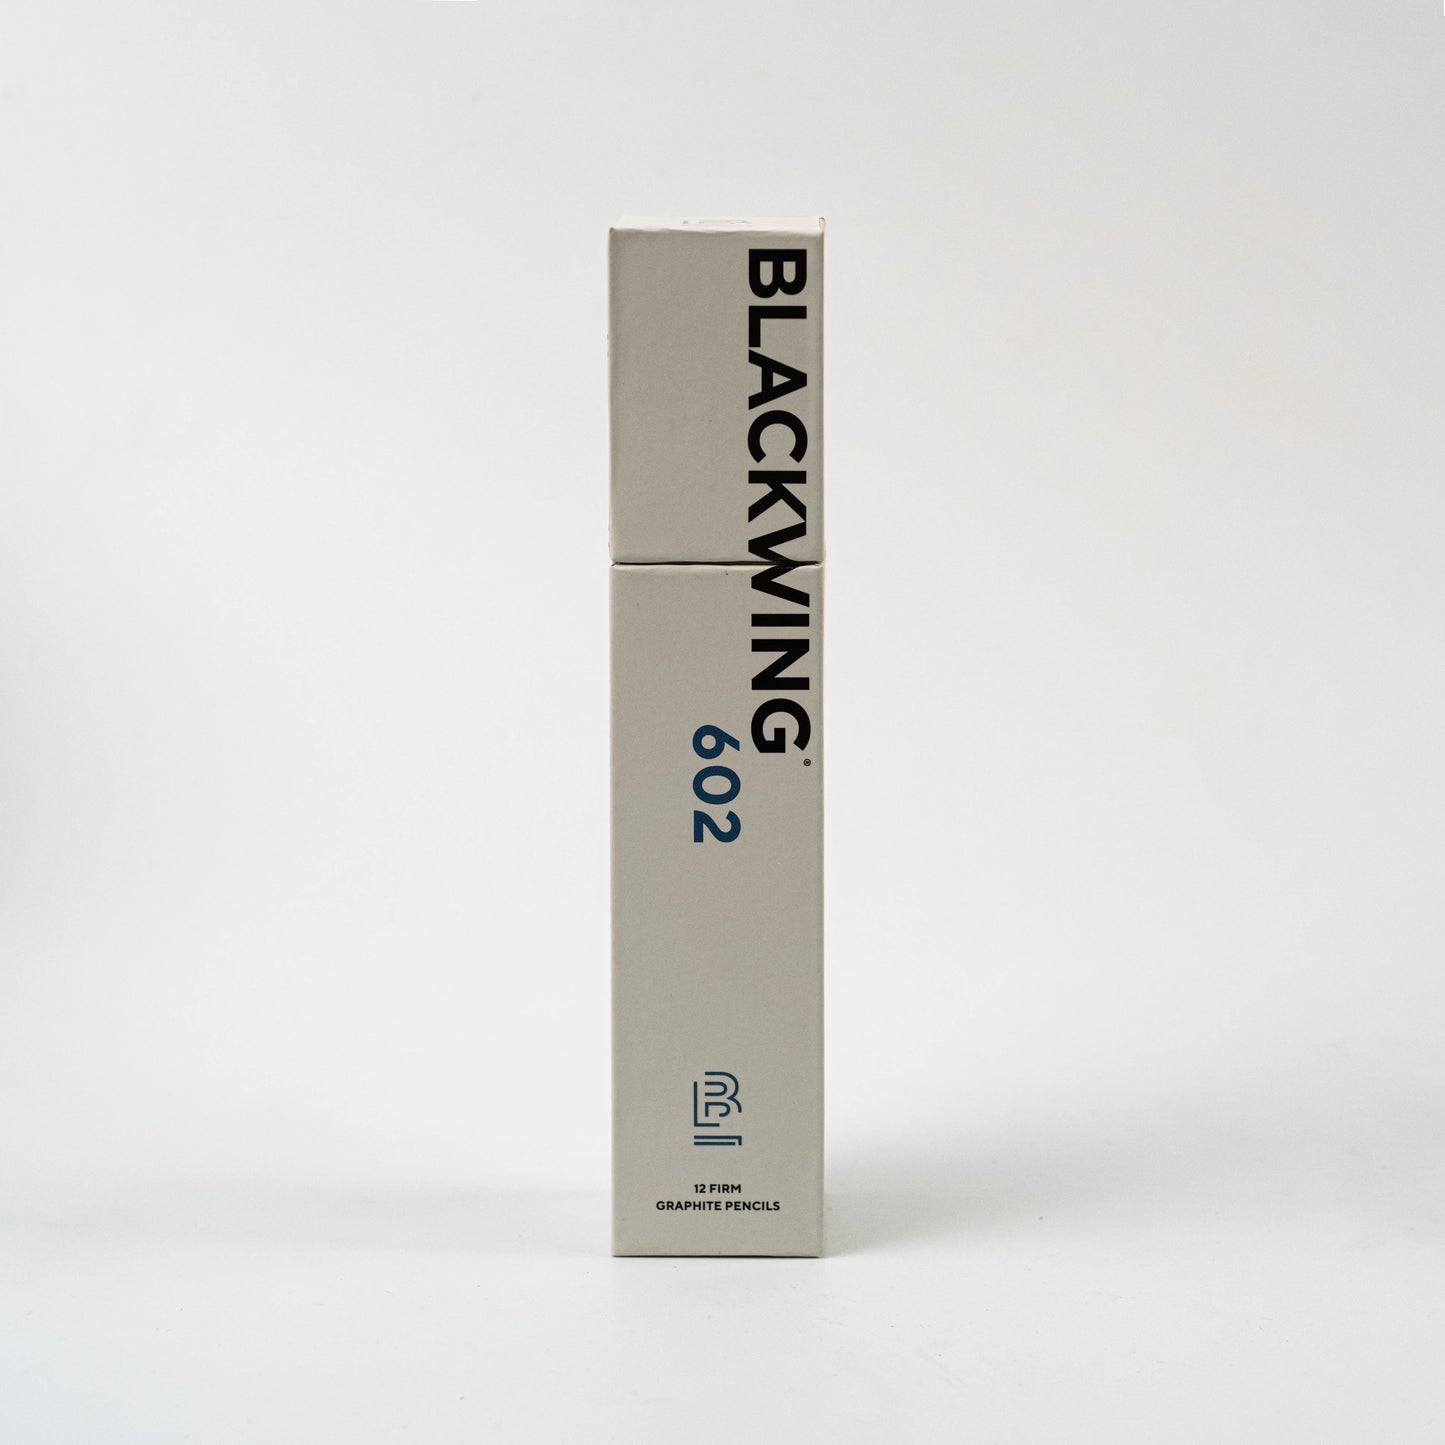 Blackwing 602 Pencils Box of 12